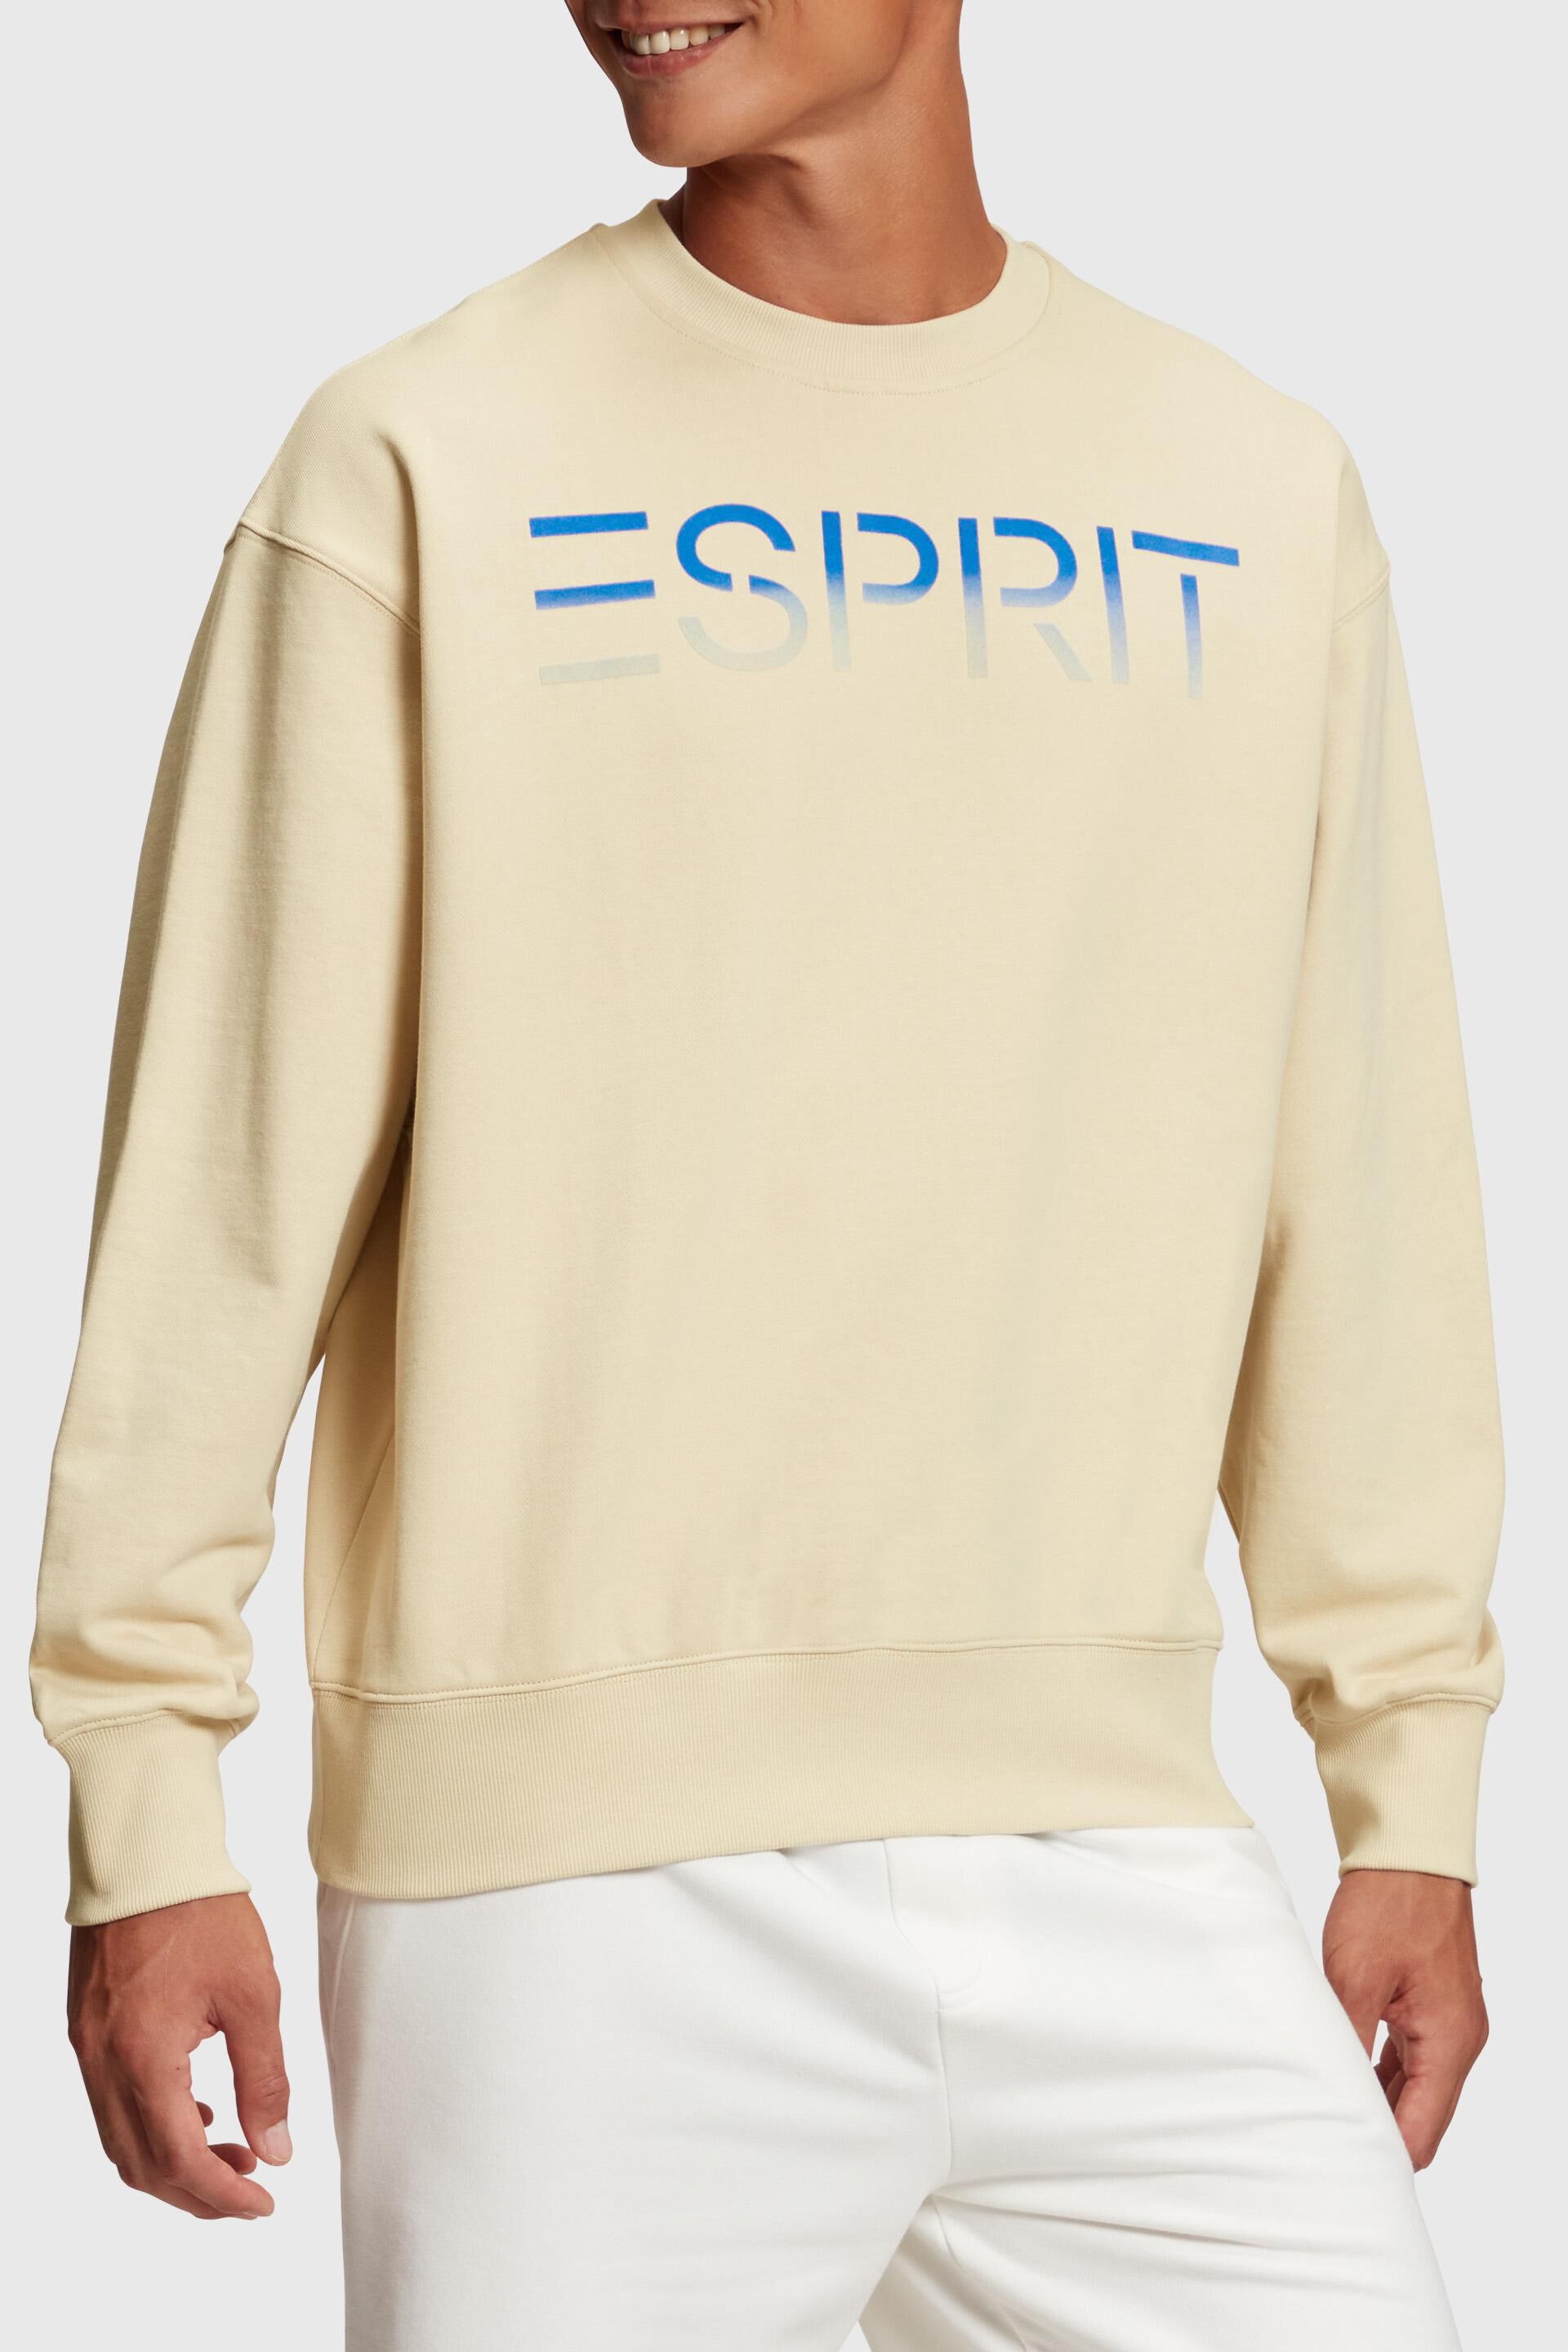 Esprit Flocked applique sweatshirt logo